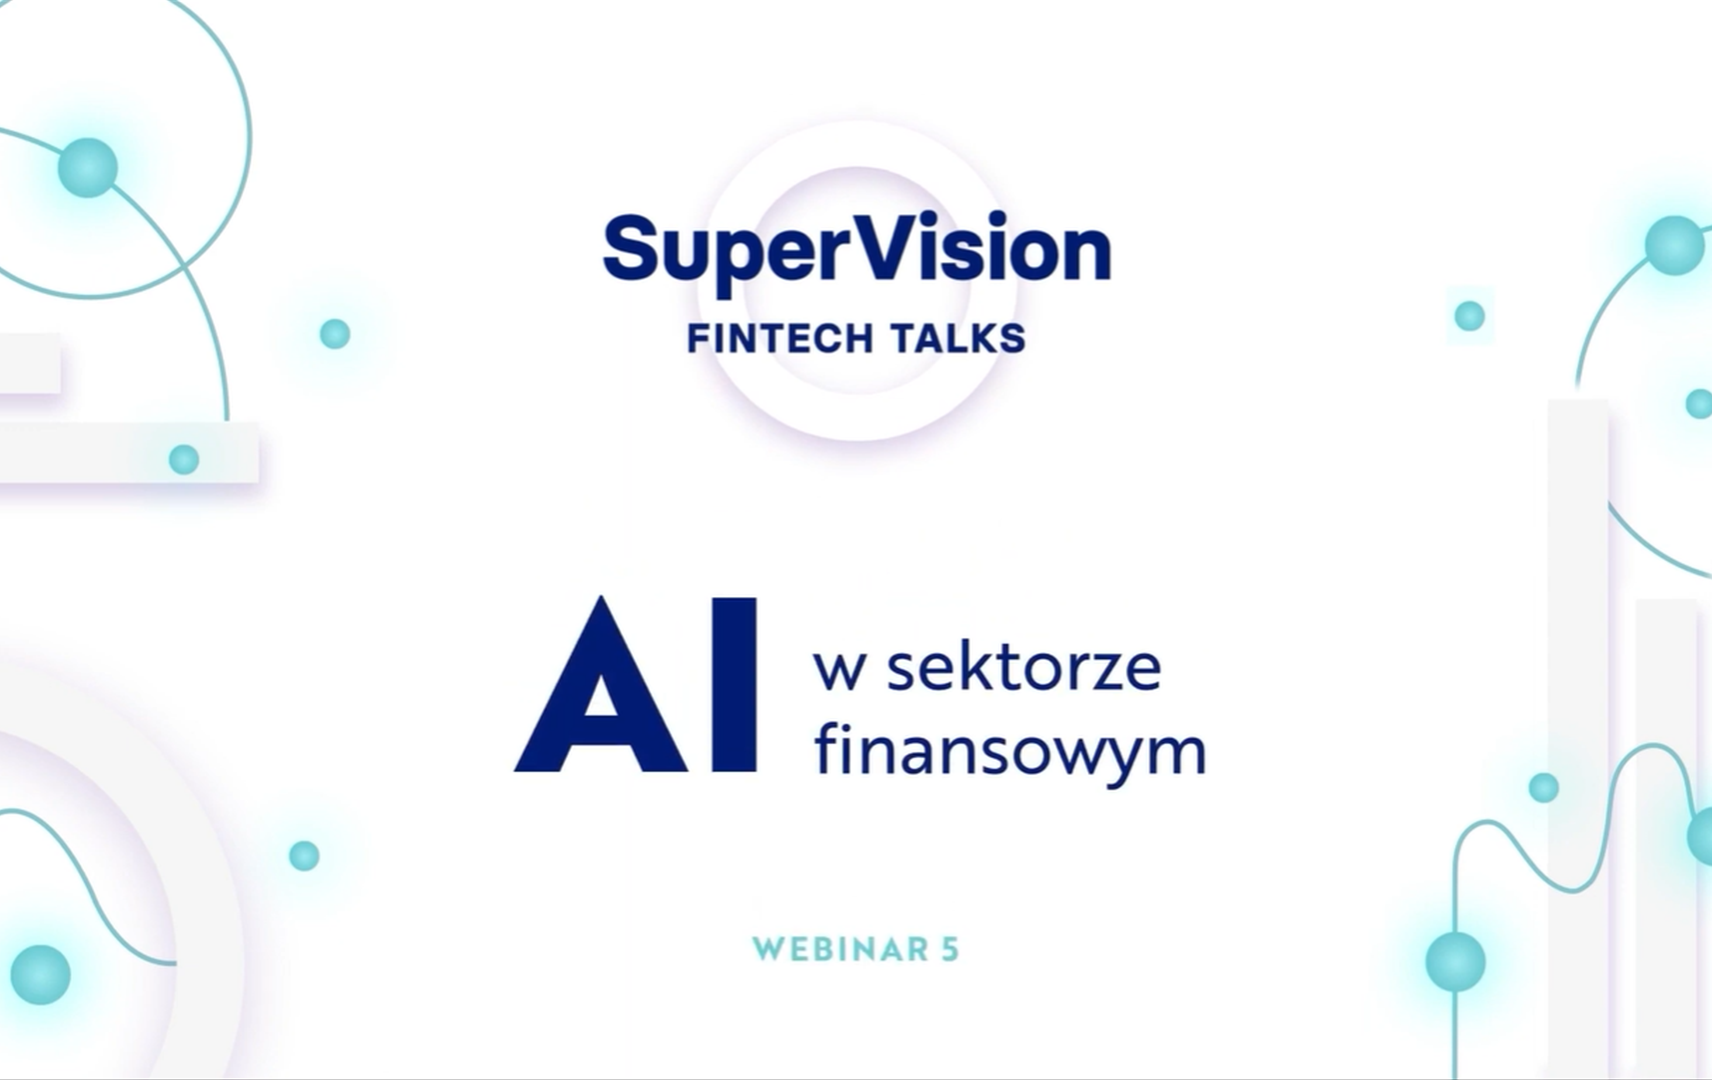 SuperVision FinTech Talks webinar on AI